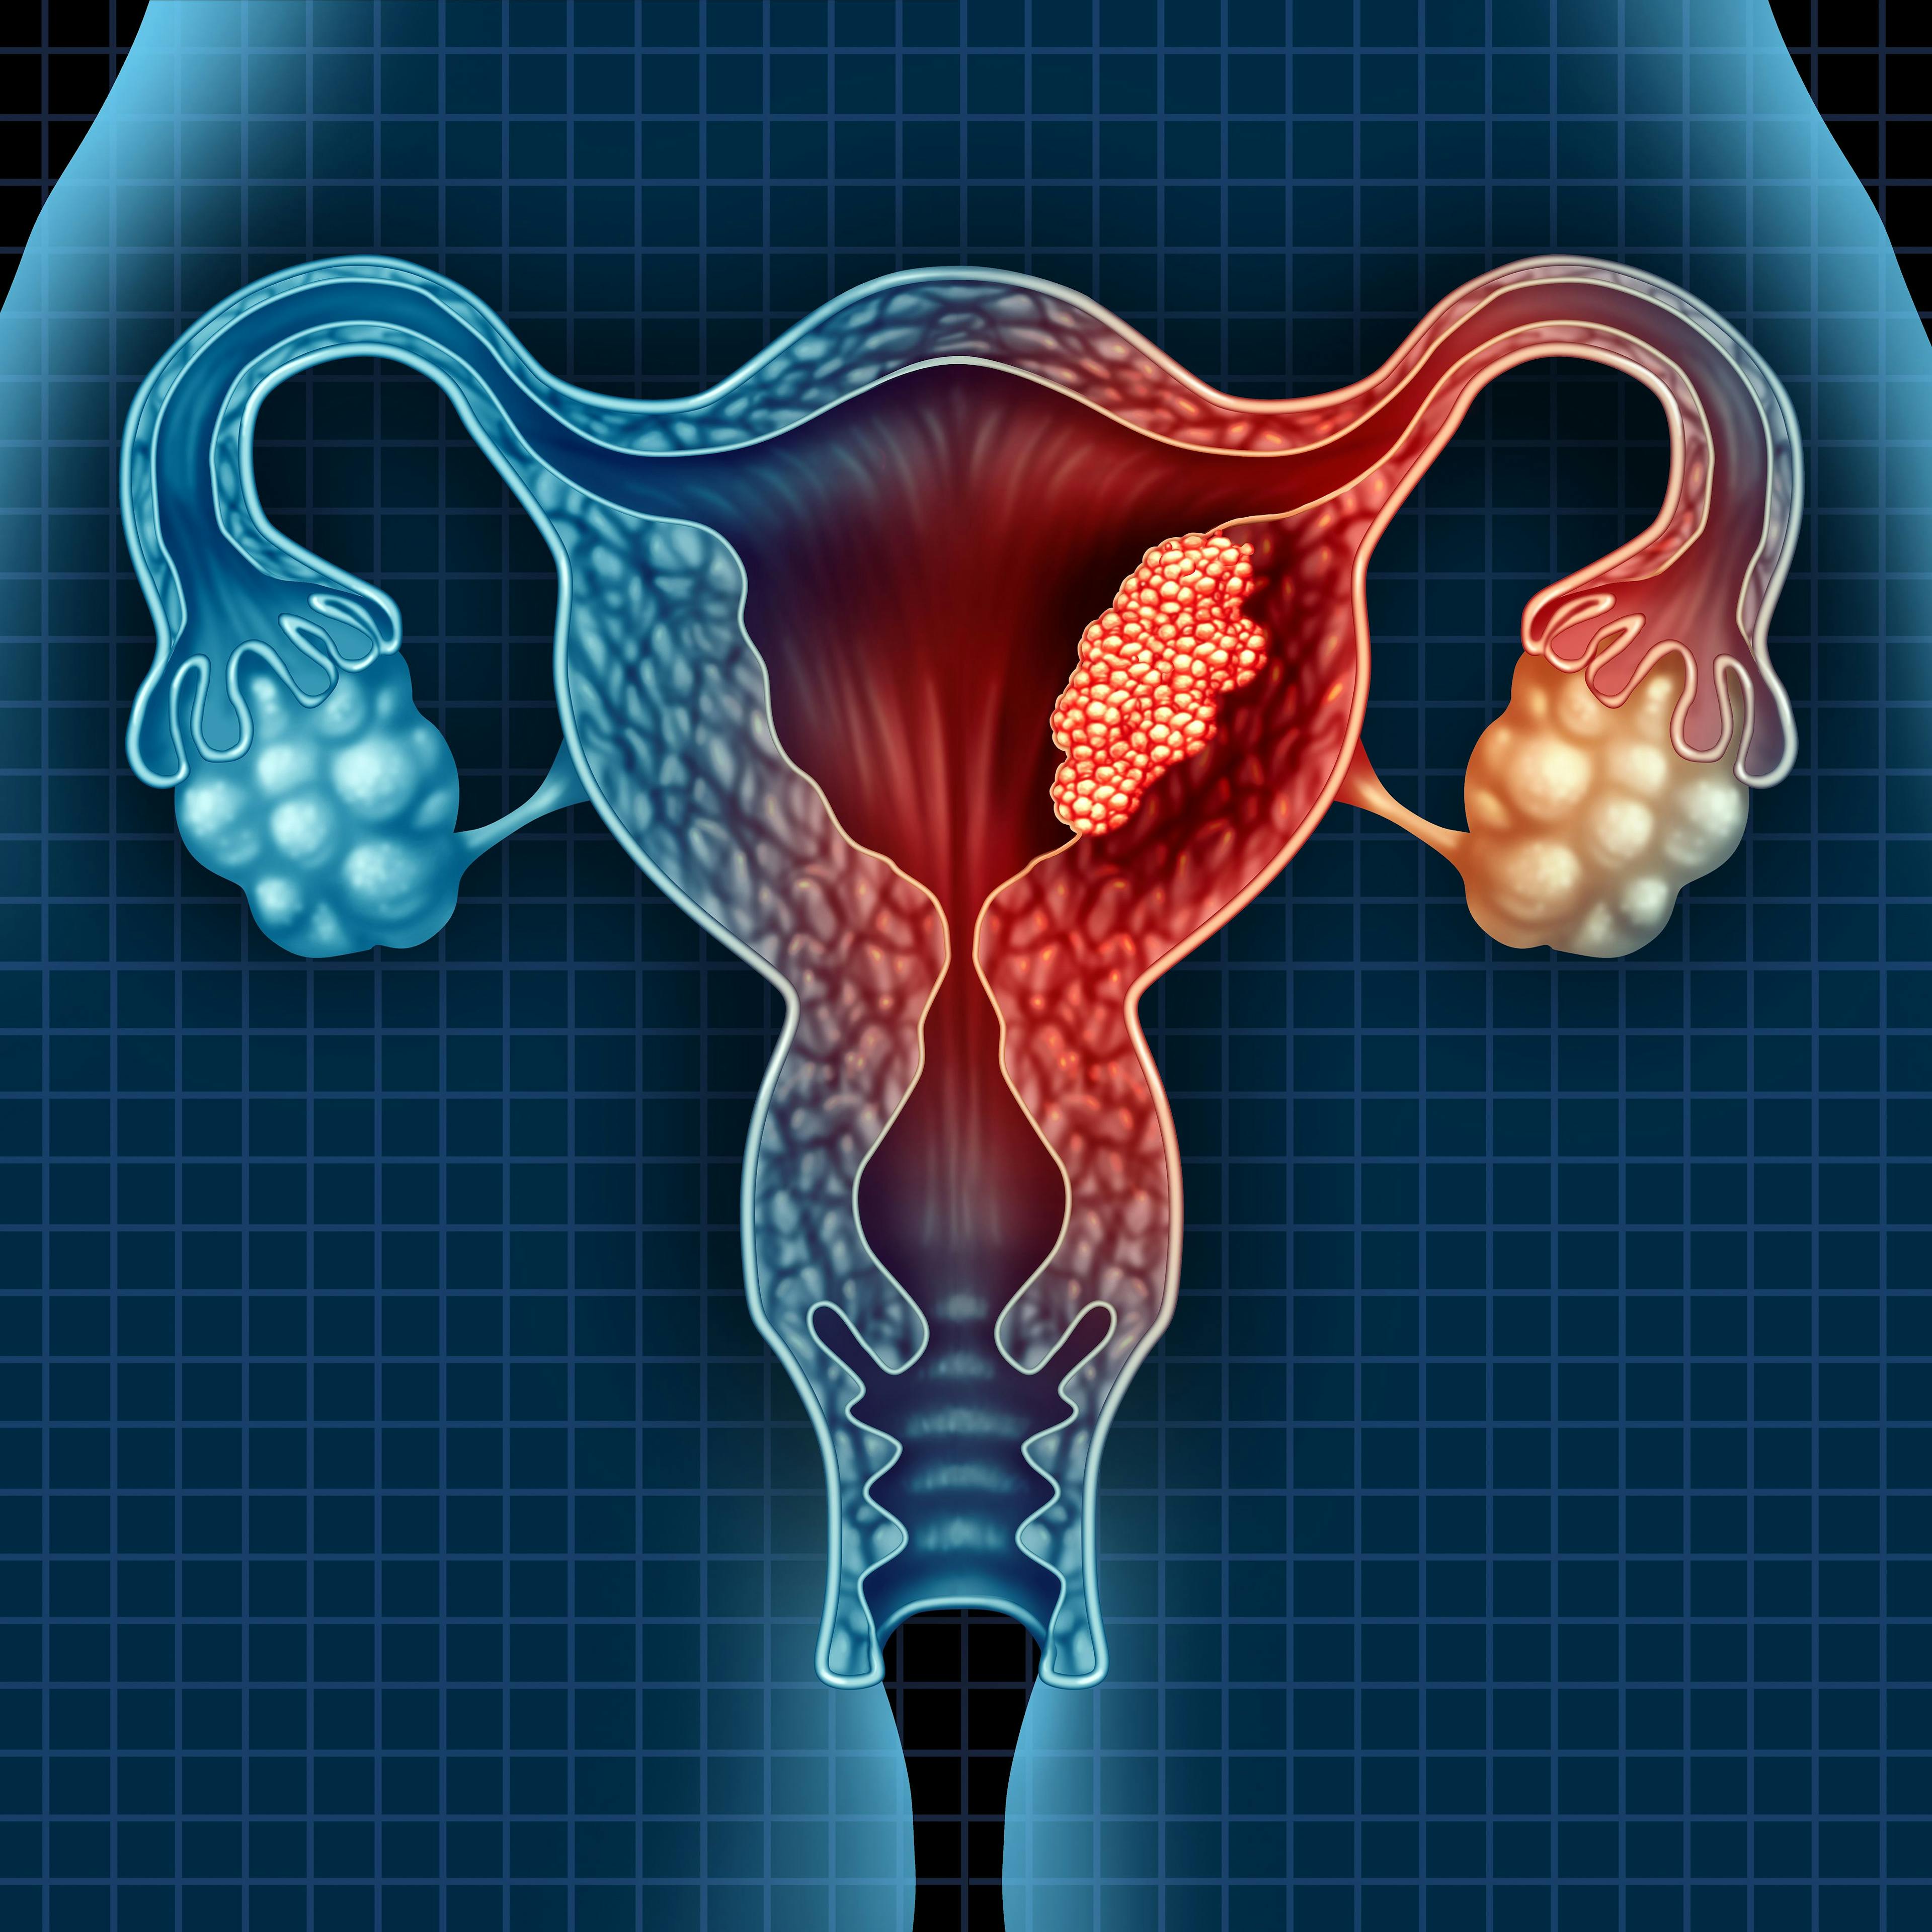 Illustration of endometrial cancer - stock.adobe.com